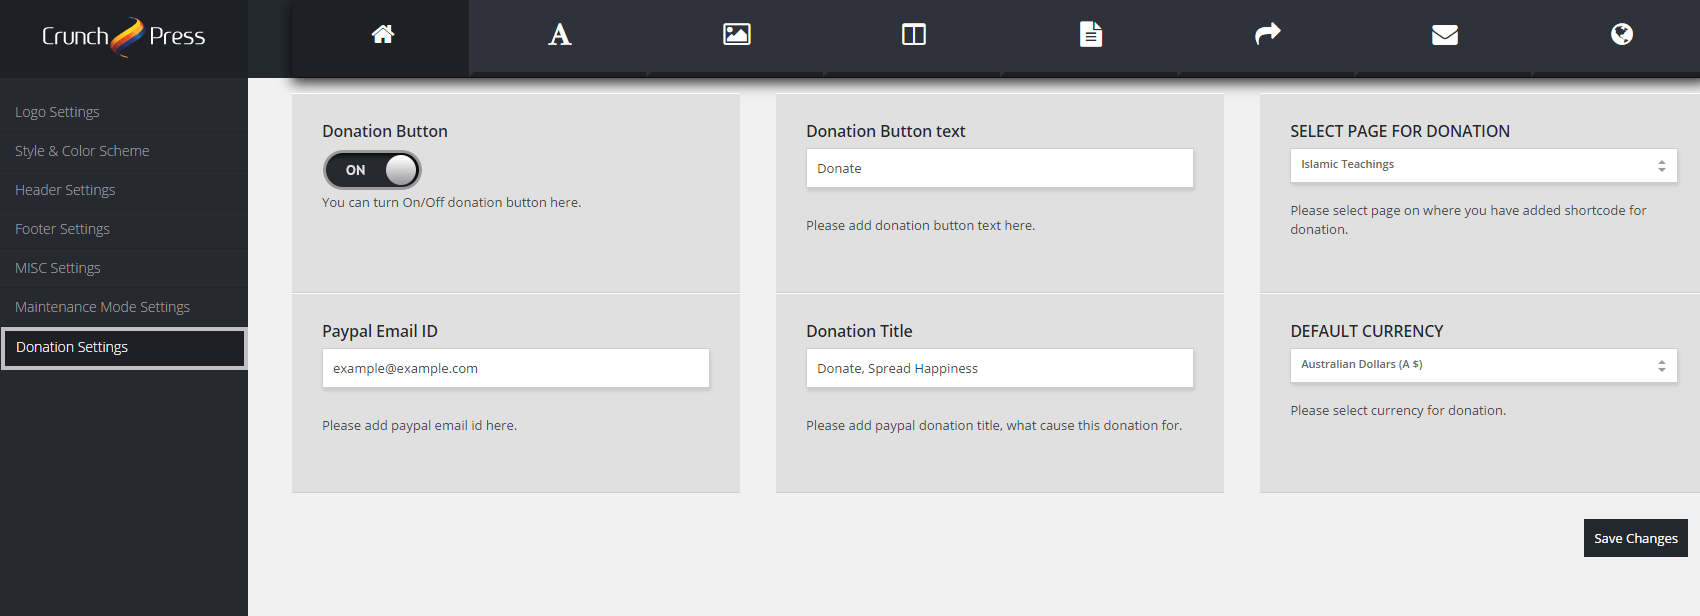 donation_settings